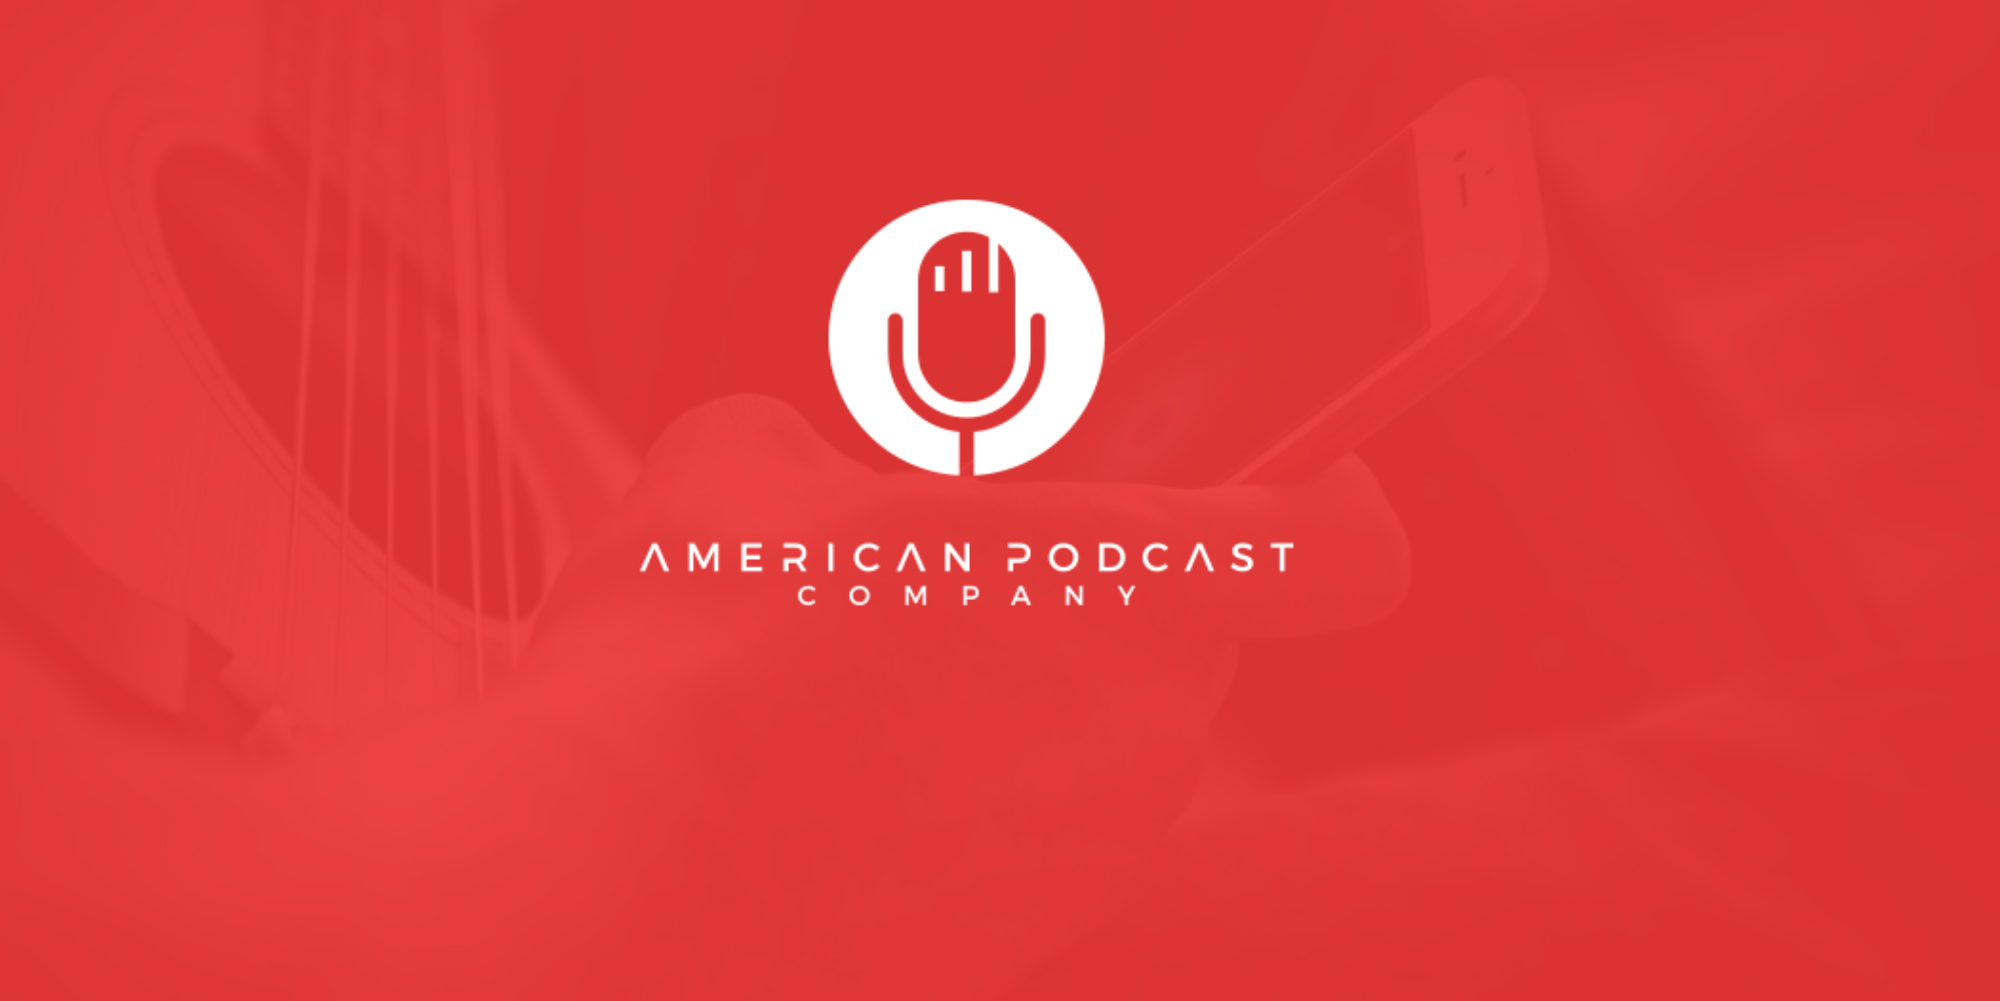 American Podcast Company